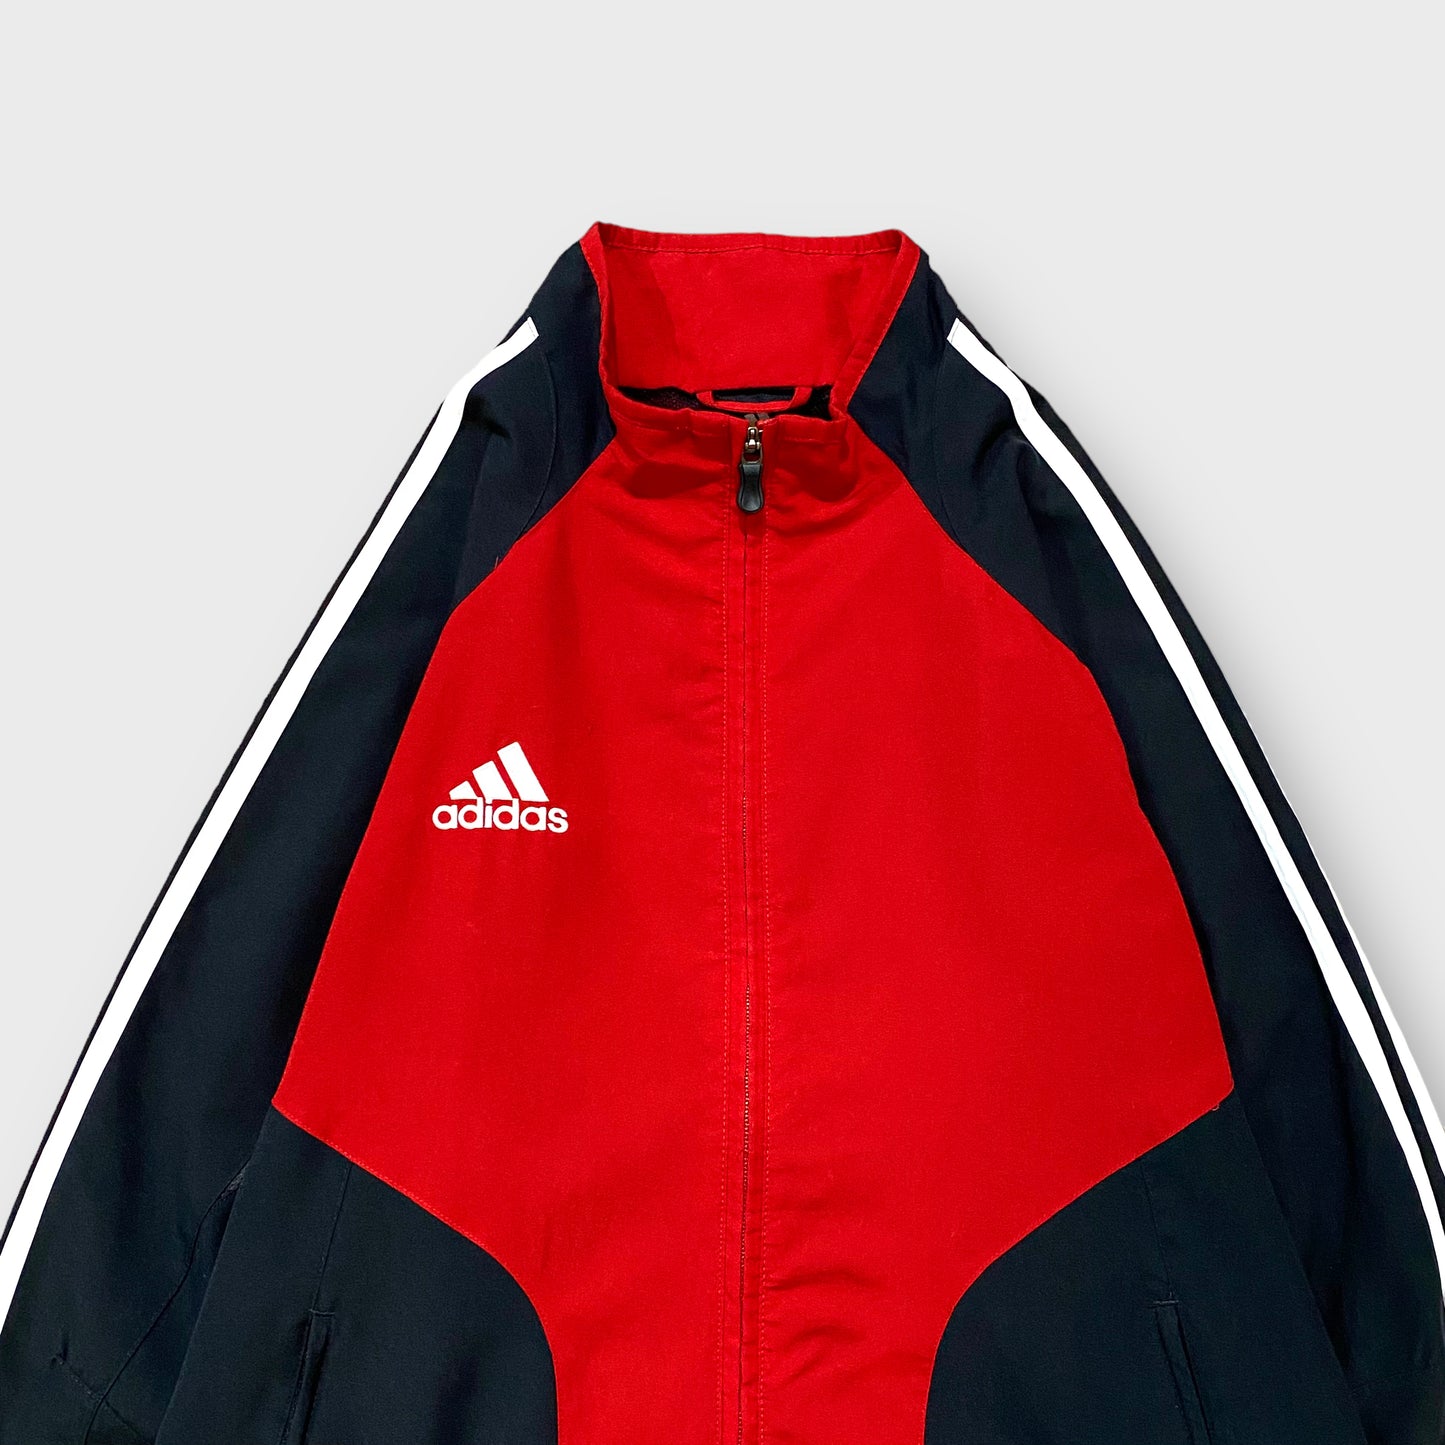 00's "adidas" Bi-color nylon jacket